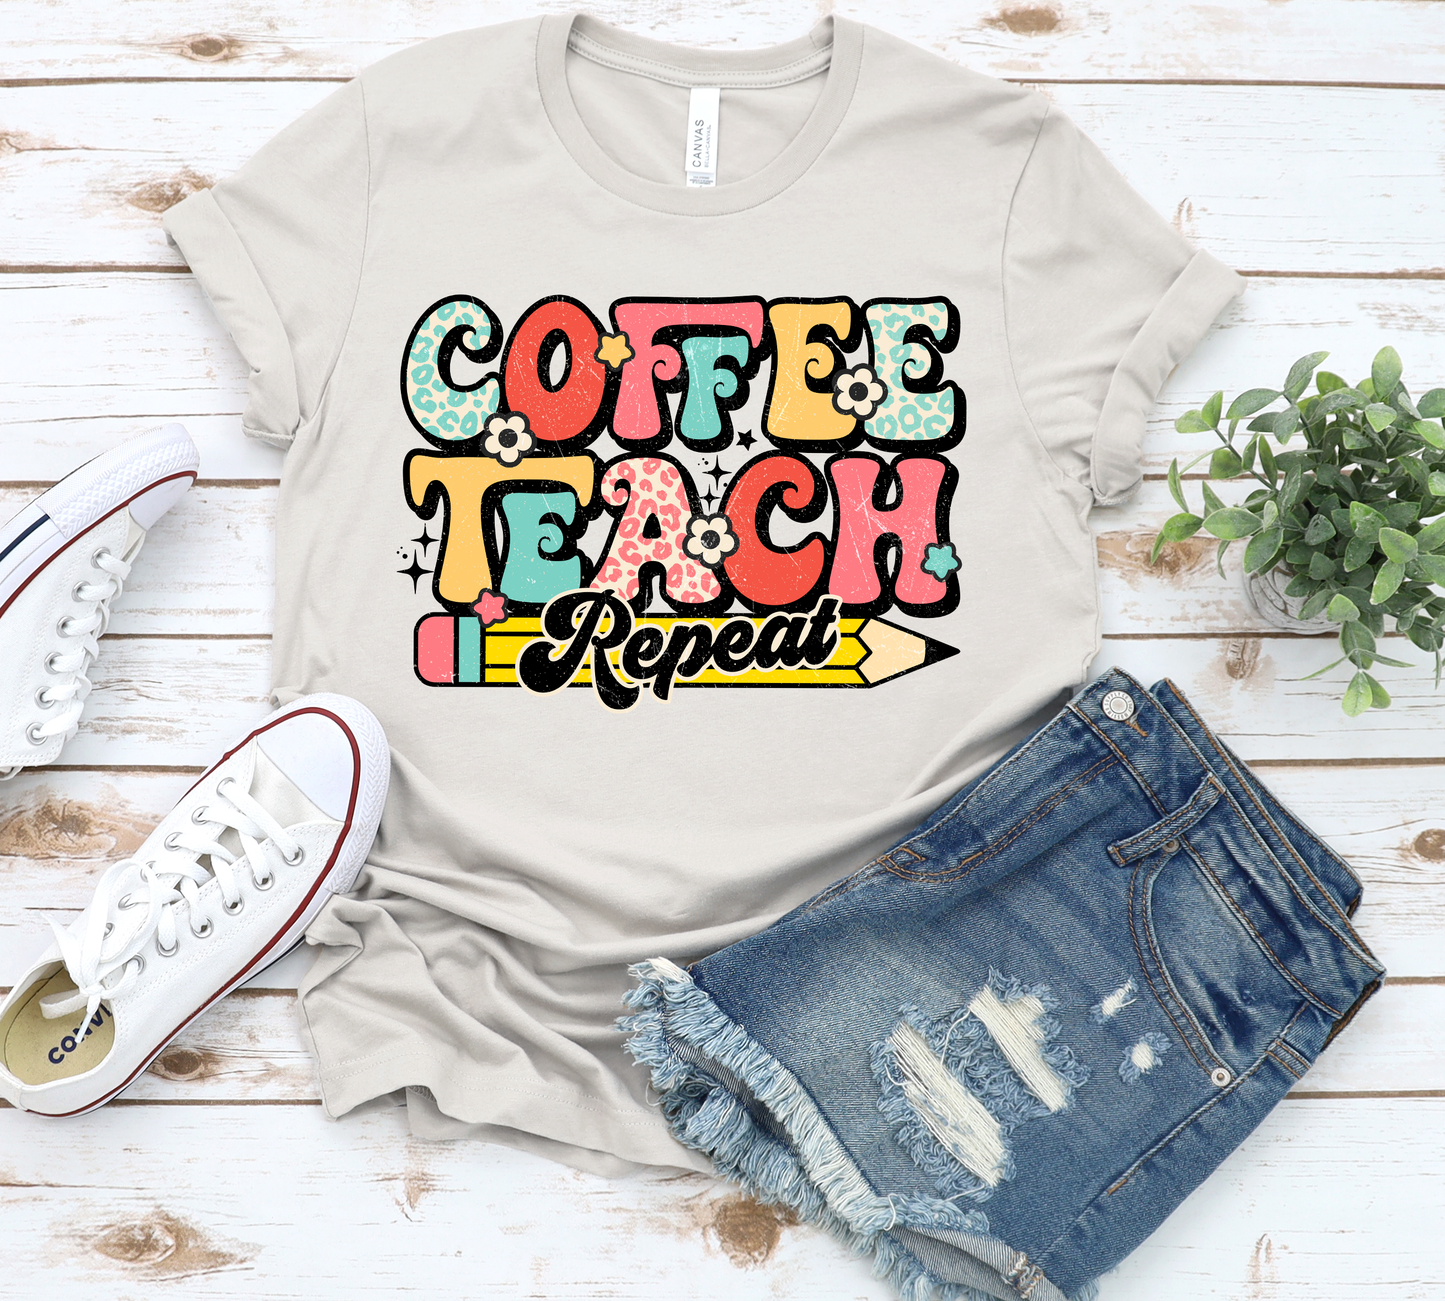 203.) COFFEE TEACH REPEAT